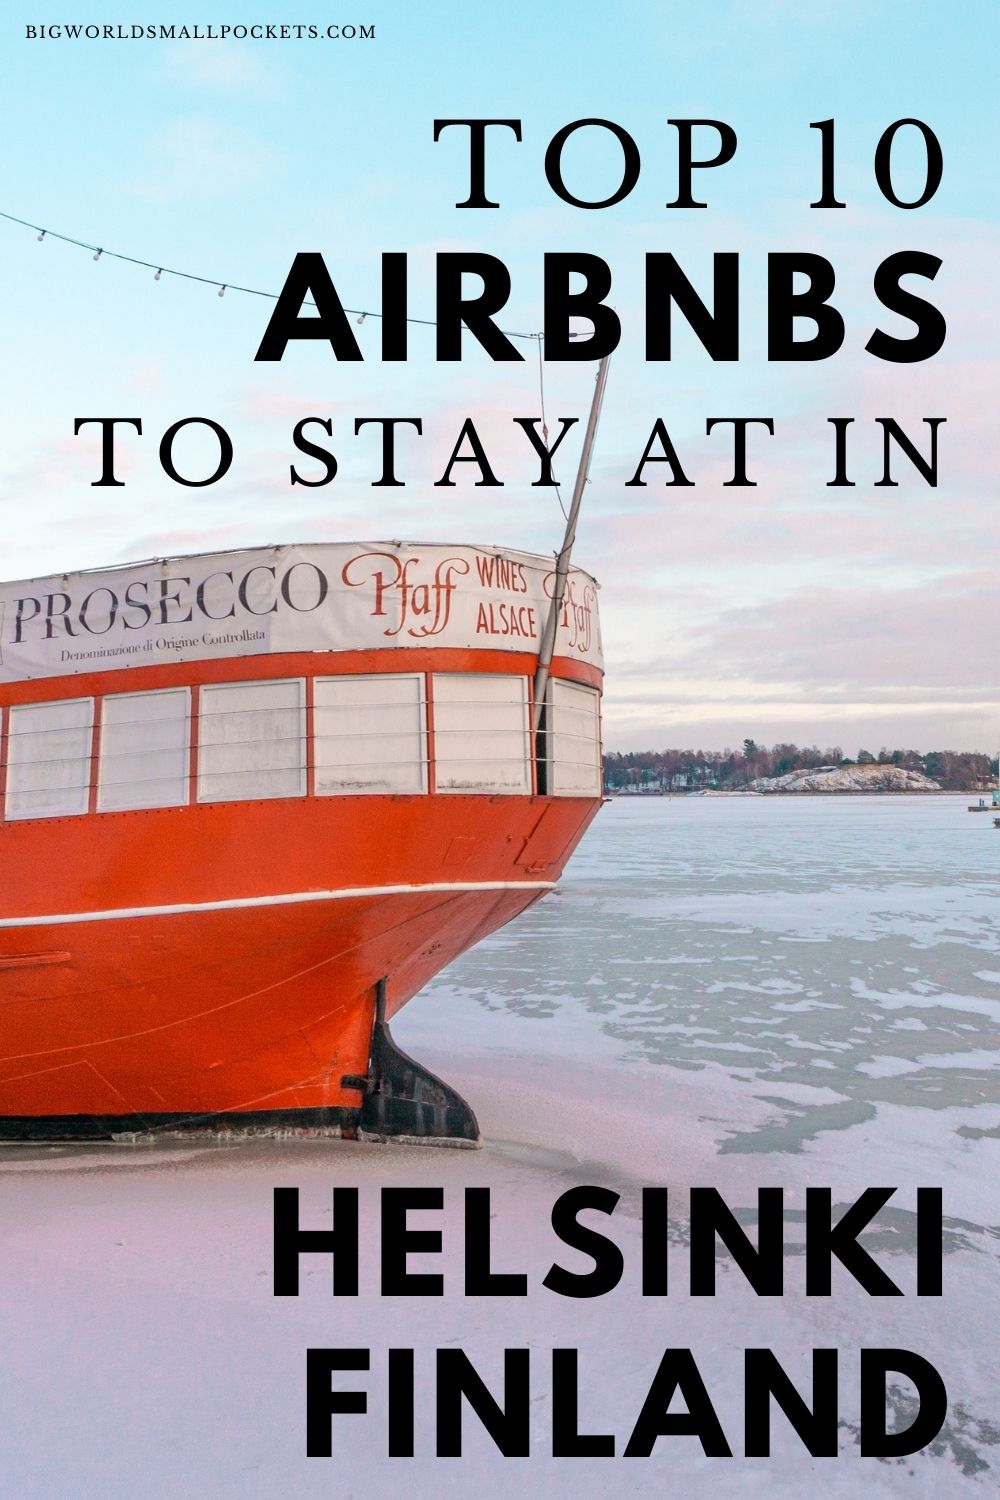 Top 10 Airbnbs in Helsinki, Finland